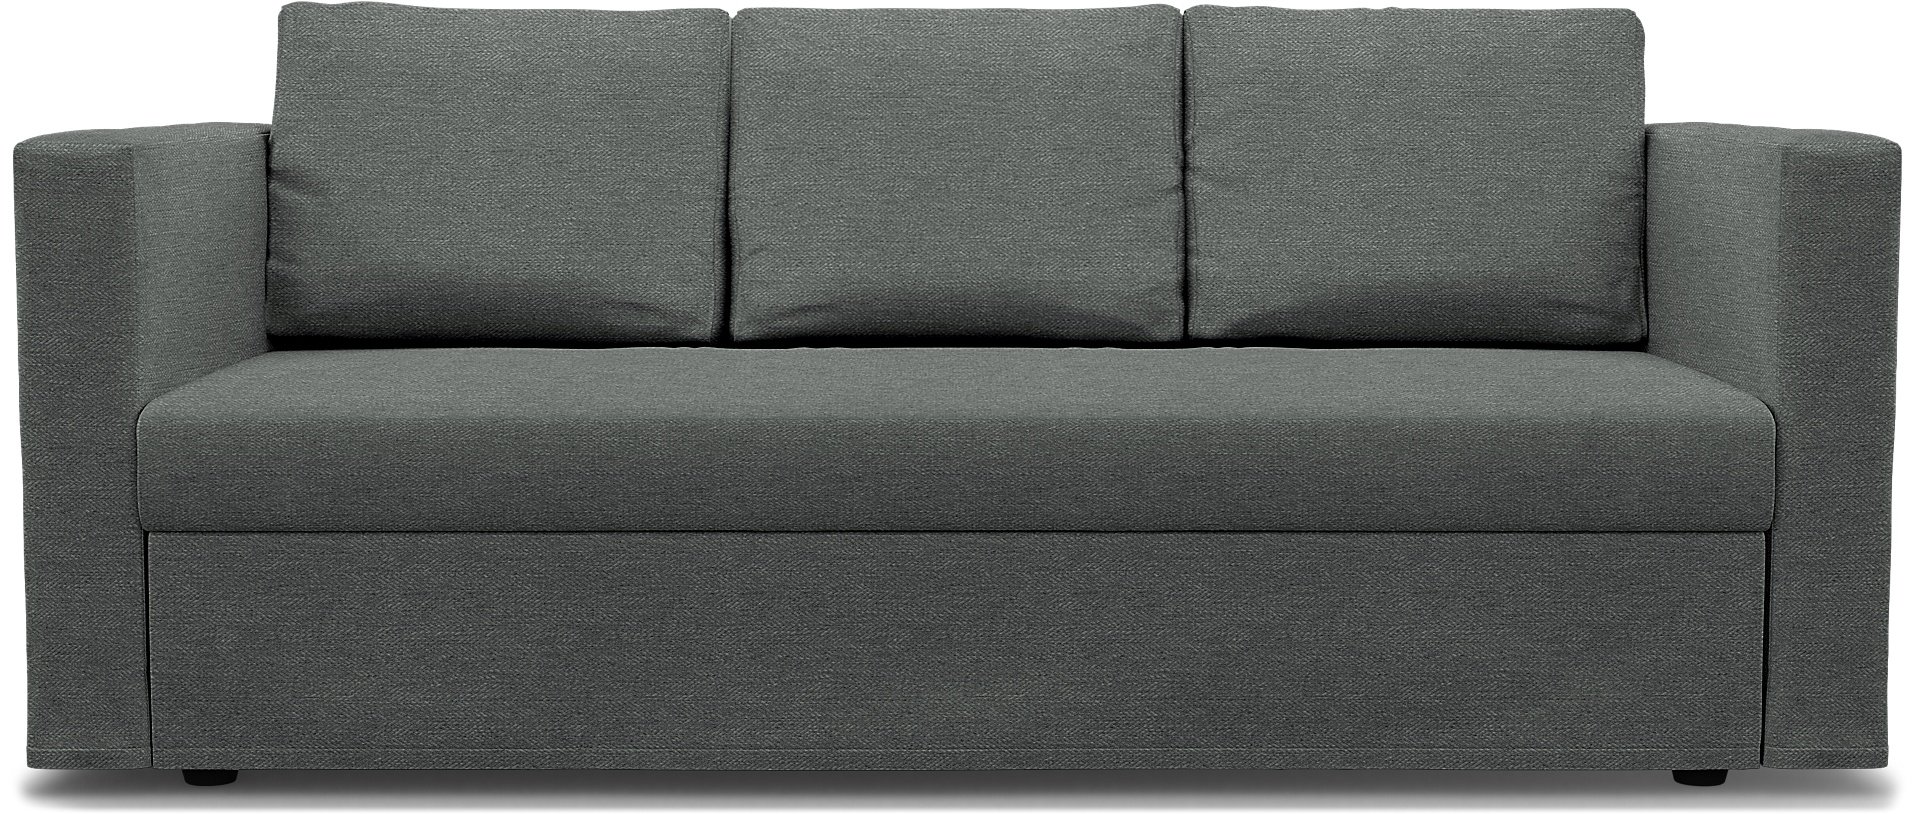 IKEA - Friheten 3 Seater Sofa Bed Cover, Laurel, Boucle & Texture - Bemz